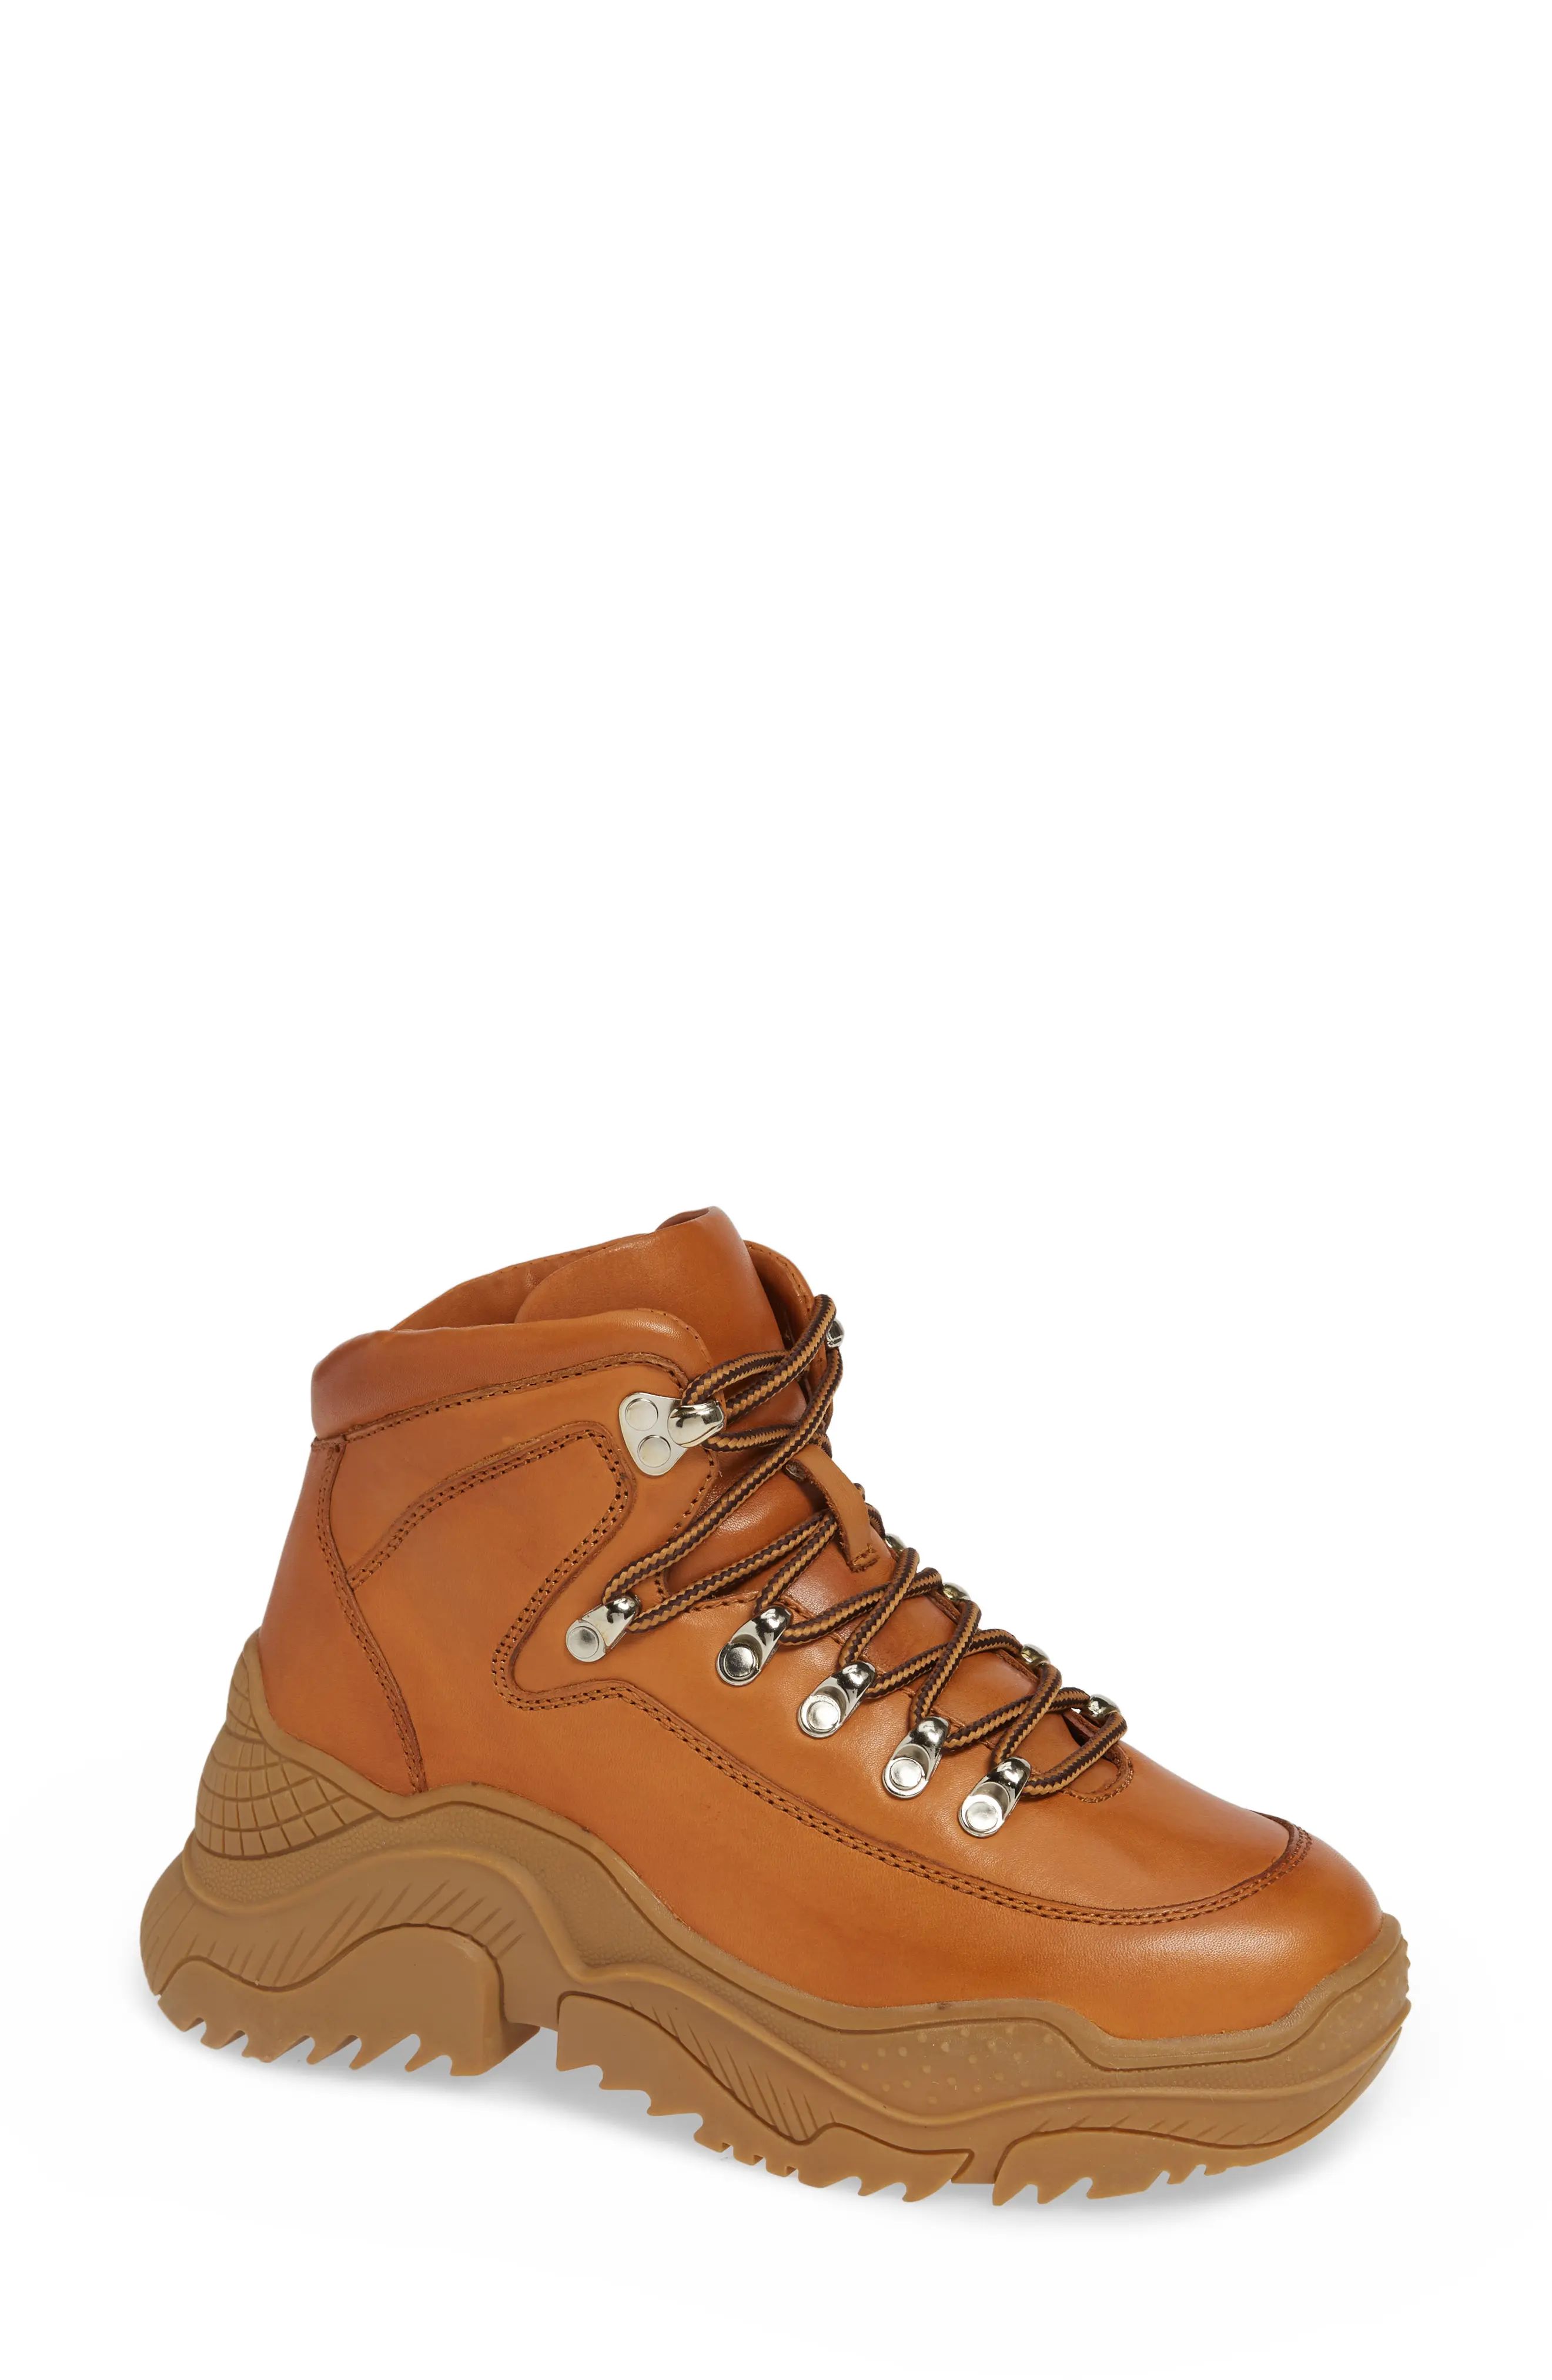 Women's Jeffrey Campbell Debris Sneaker Boot, Size 5 M - Brown | Nordstrom